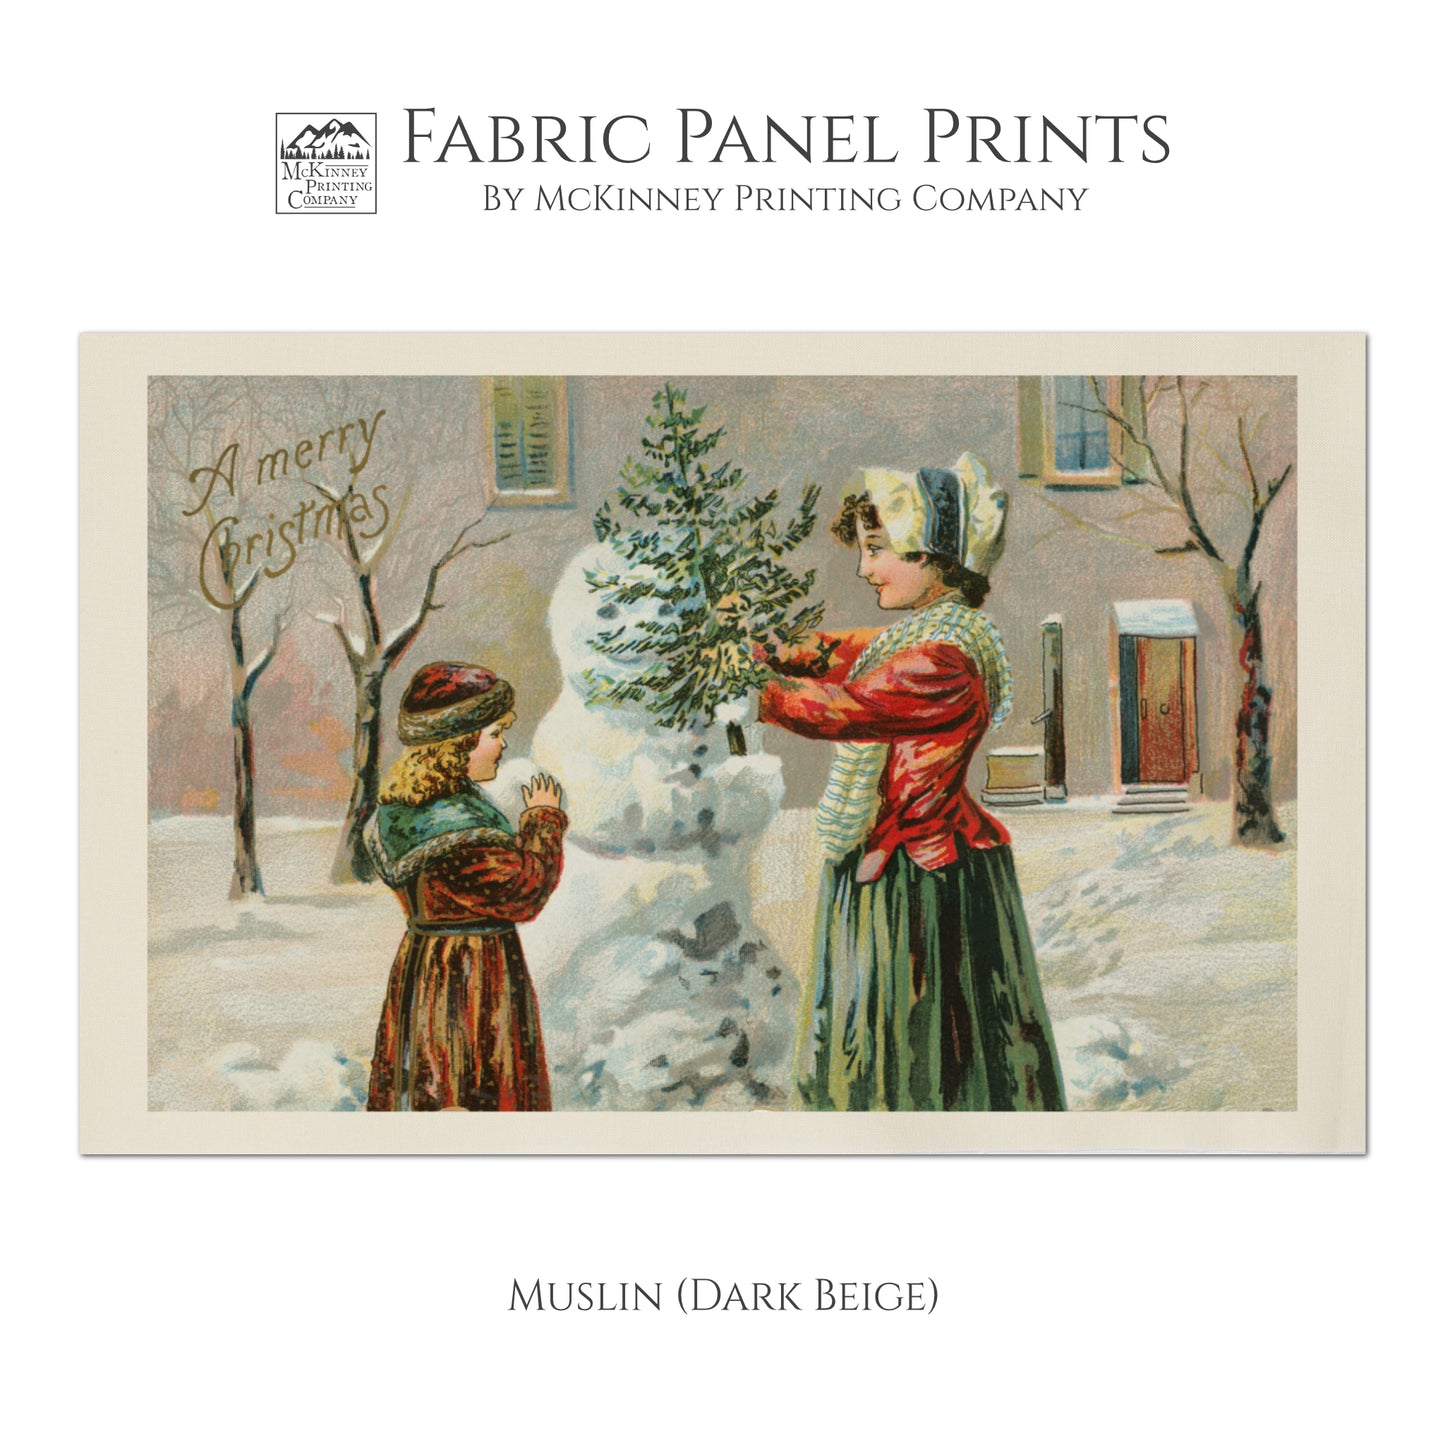 Christmas Fabric Panel, Victorian Decor, Antique, Vintage, Fabric Panel Print - Muslin